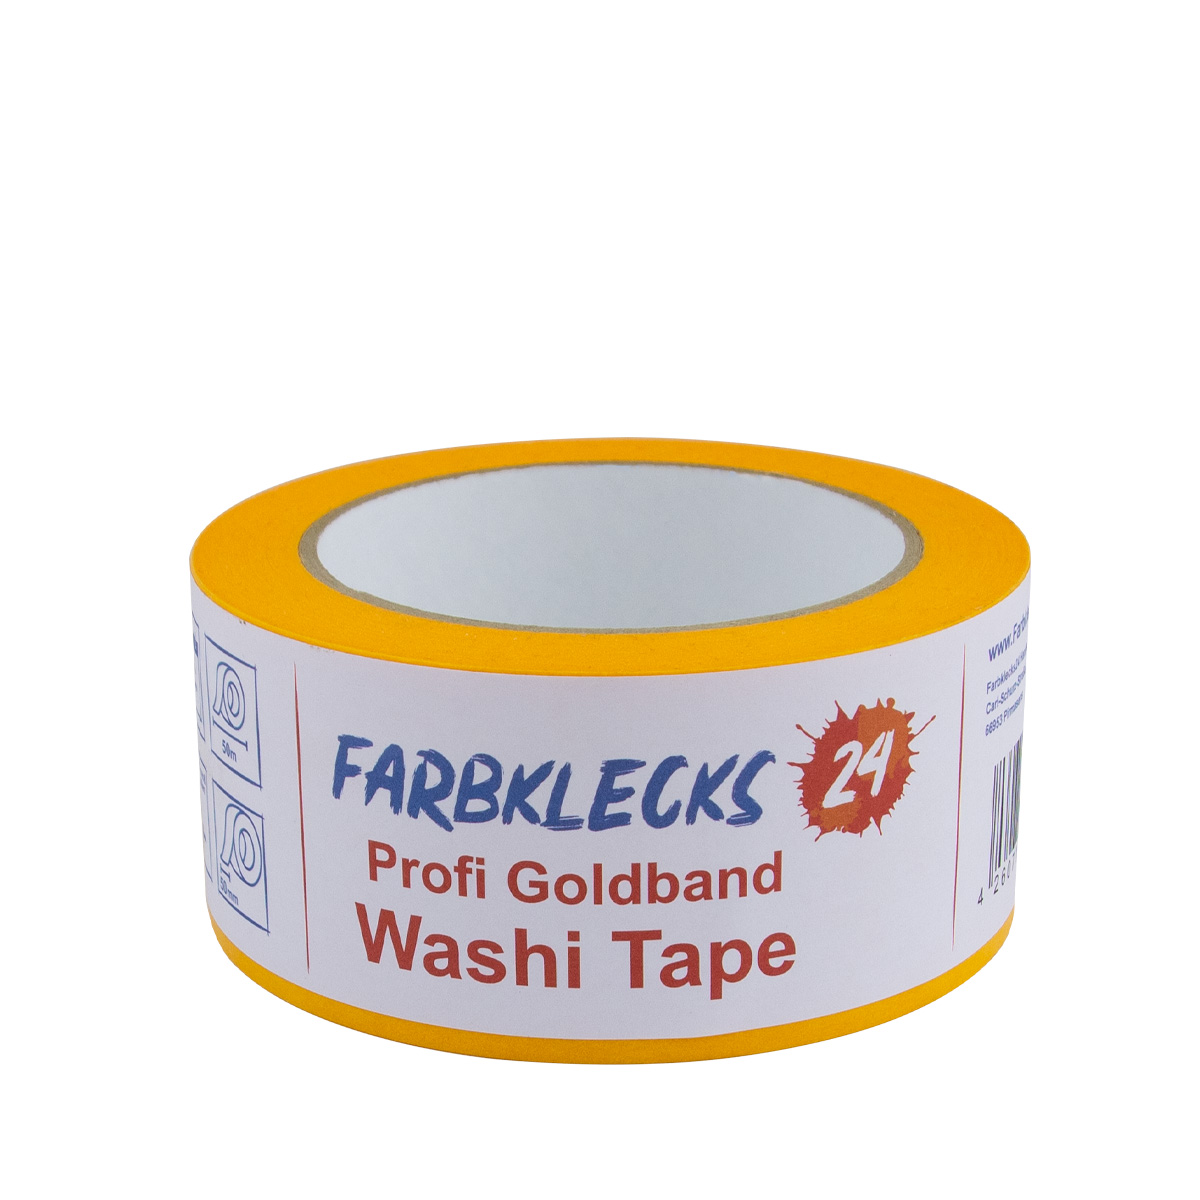 Farbklecks24 Profi Goldband Washi Tape 50m UV60 50mm